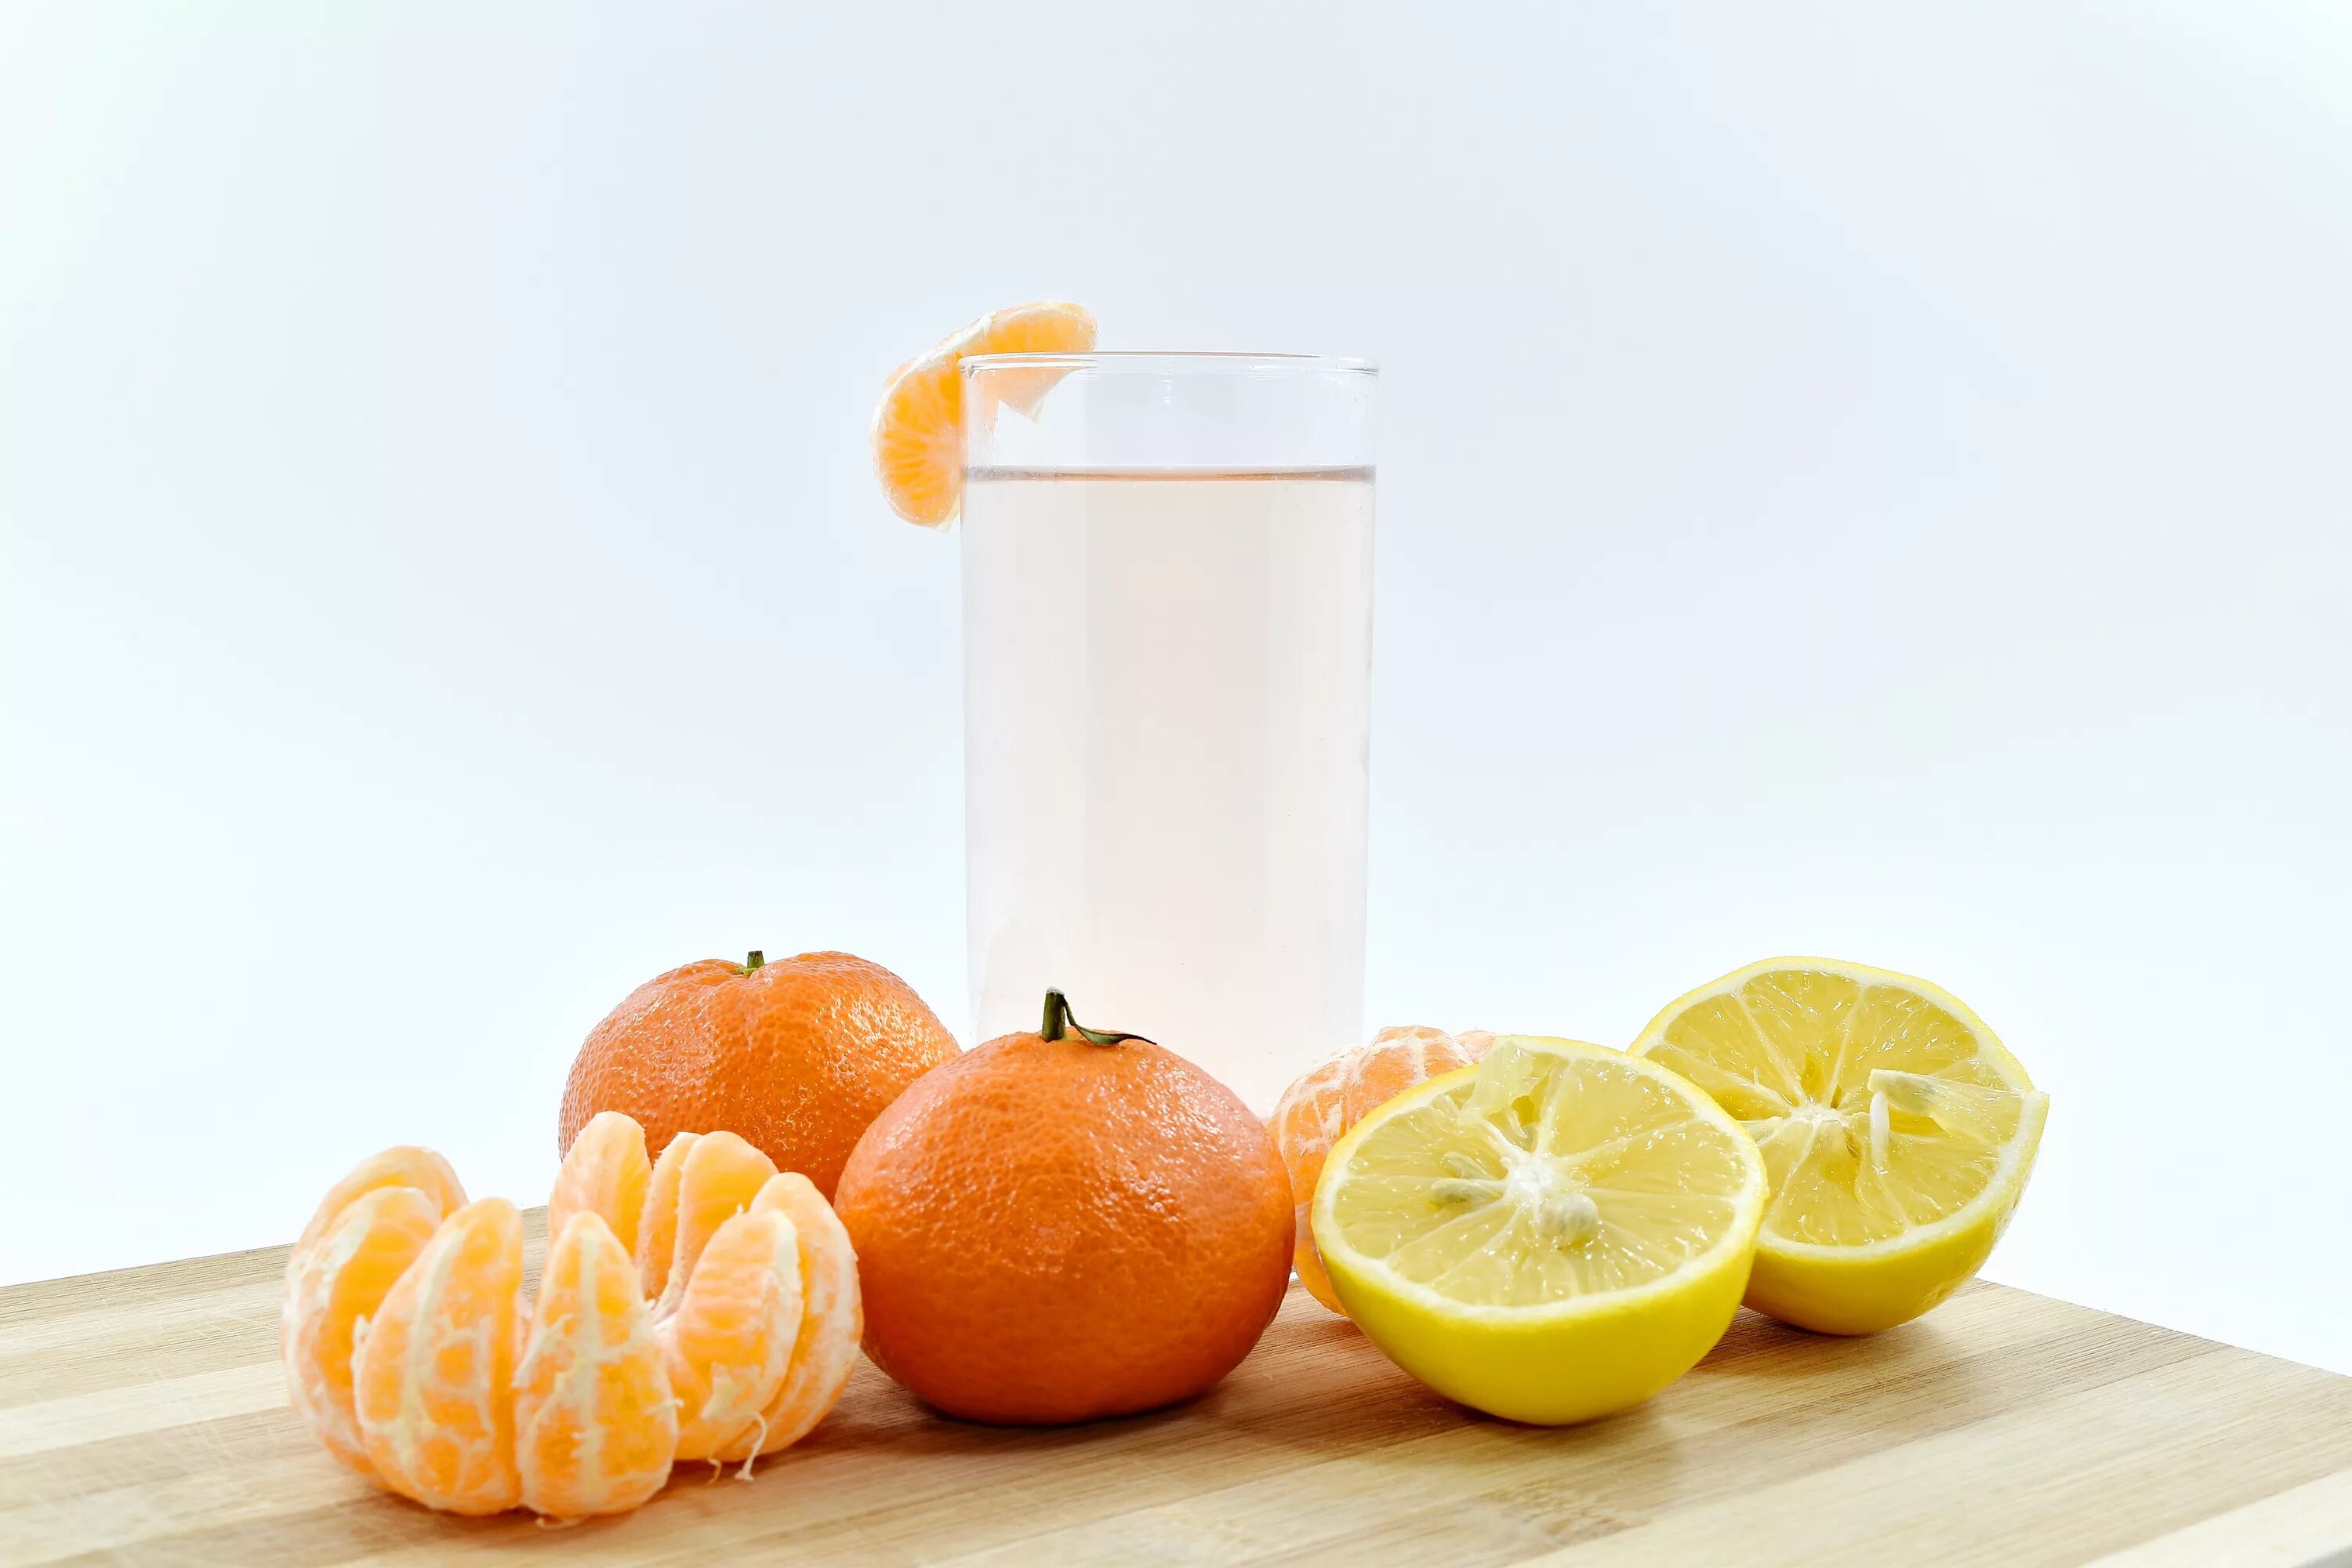 Сладкие вина фреш. Apelsin Limon сок. Orange&Tangerine лимонад. Фреш цитрус лимон. Мандариновый Фреш.